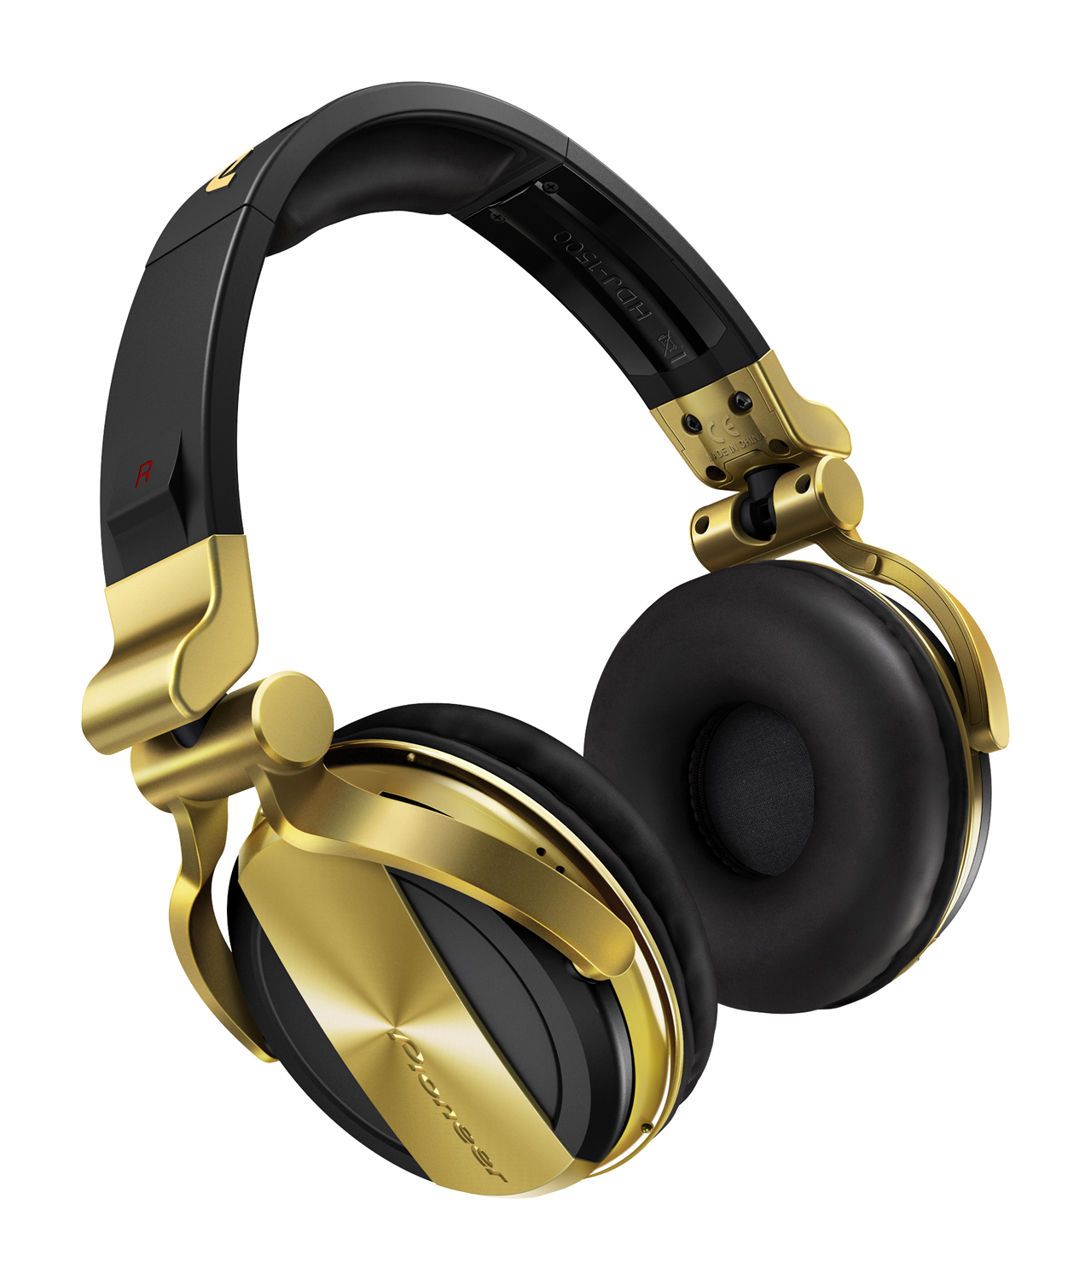 Pioneer DJから高級感のあるゴールド仕様のヘッドフォン「HDJ-1500-N」が発売